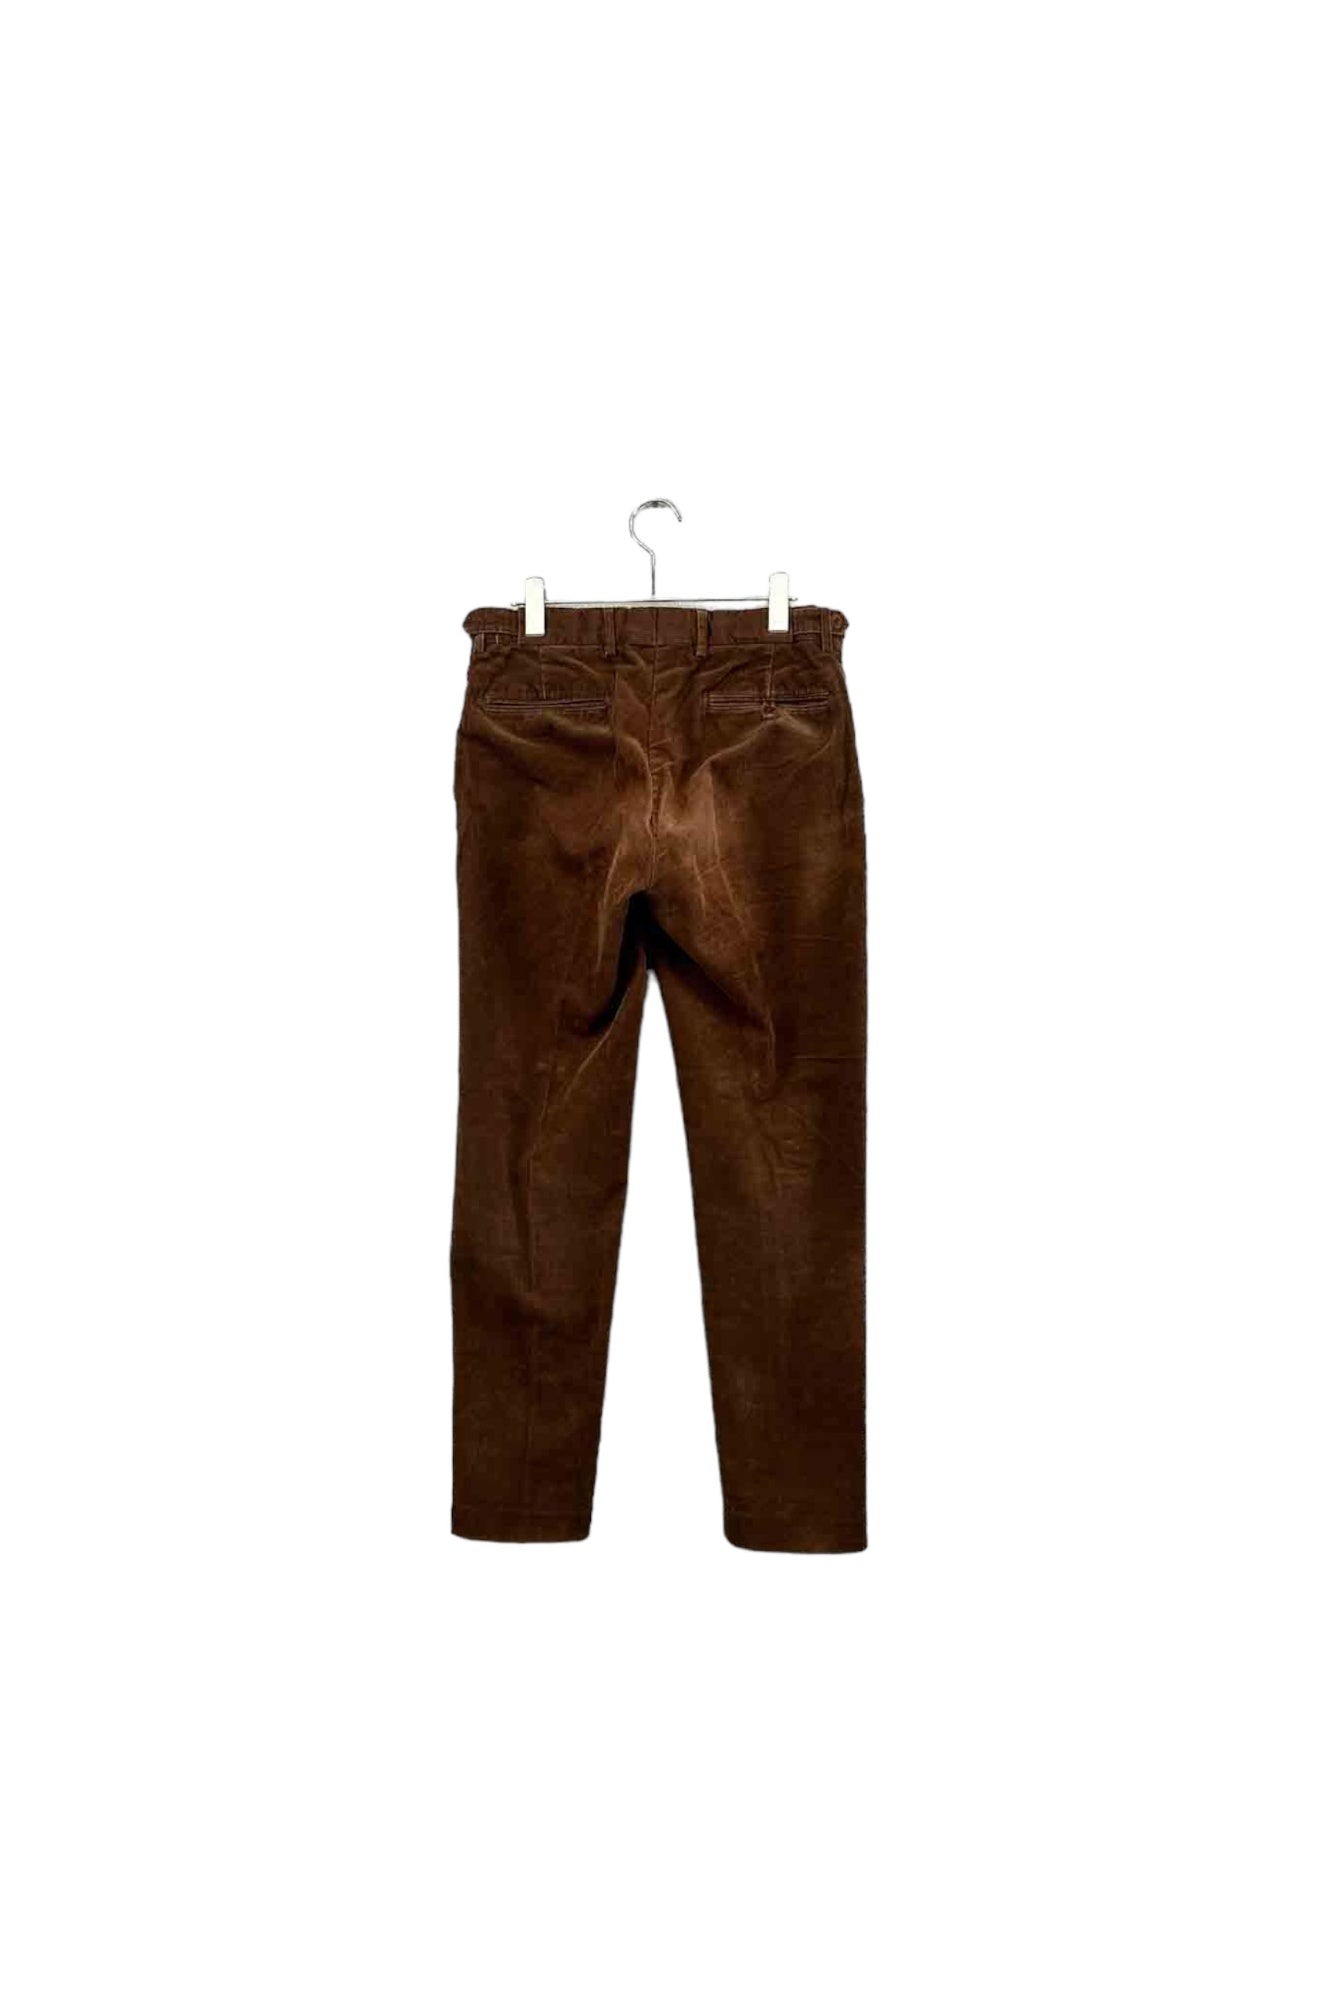 90's Polo by Ralph Lauren brown corduroy pants